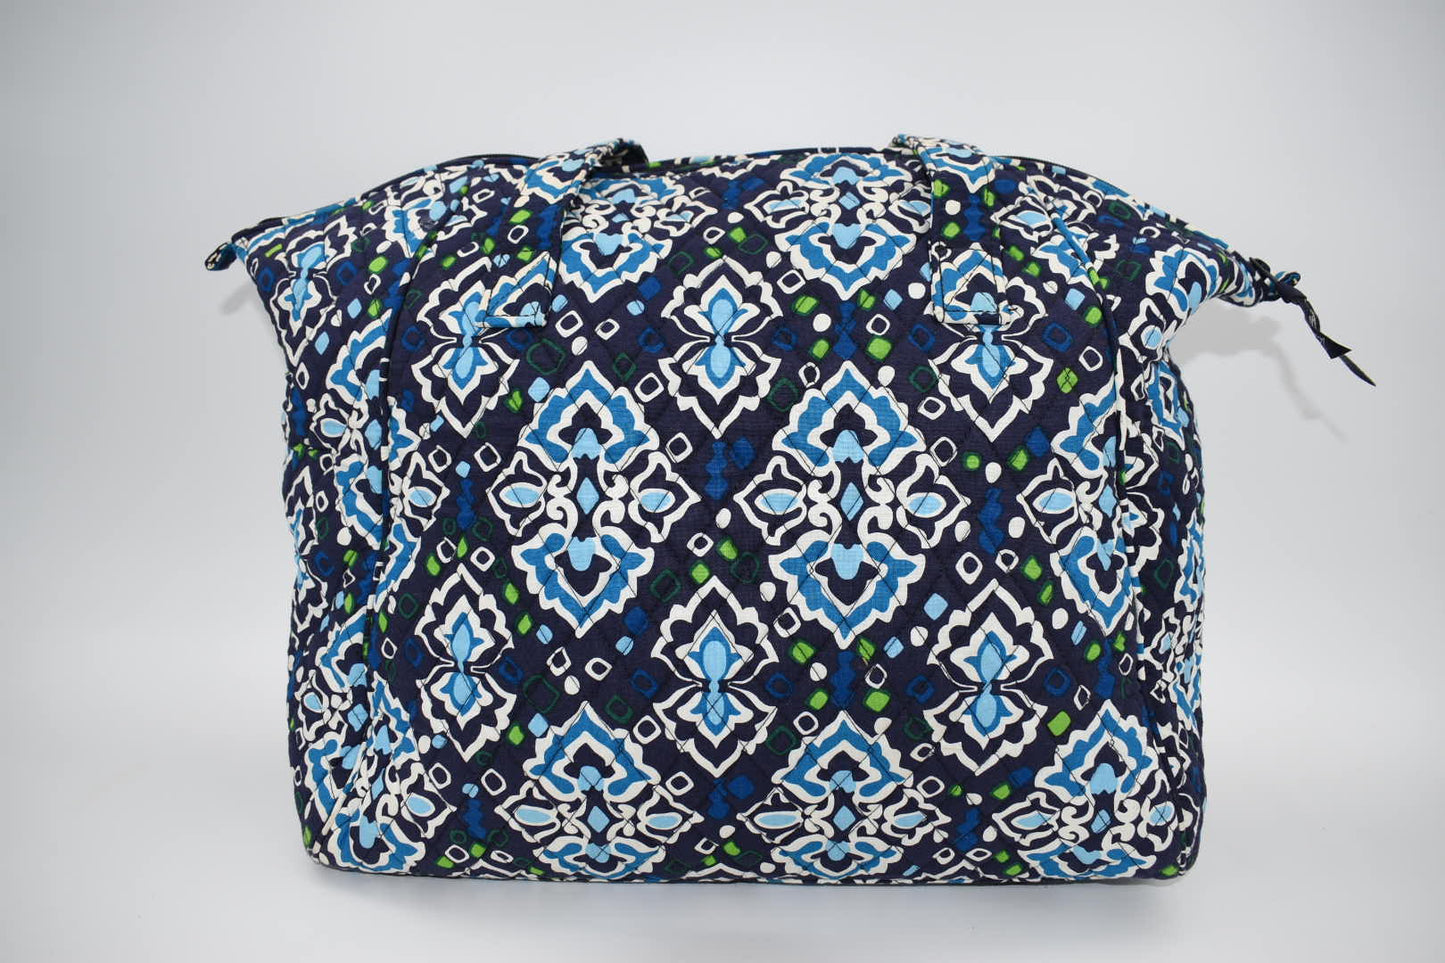 Vera Bradley Large Travel Tote Bag in "Ink Blue" Pattern